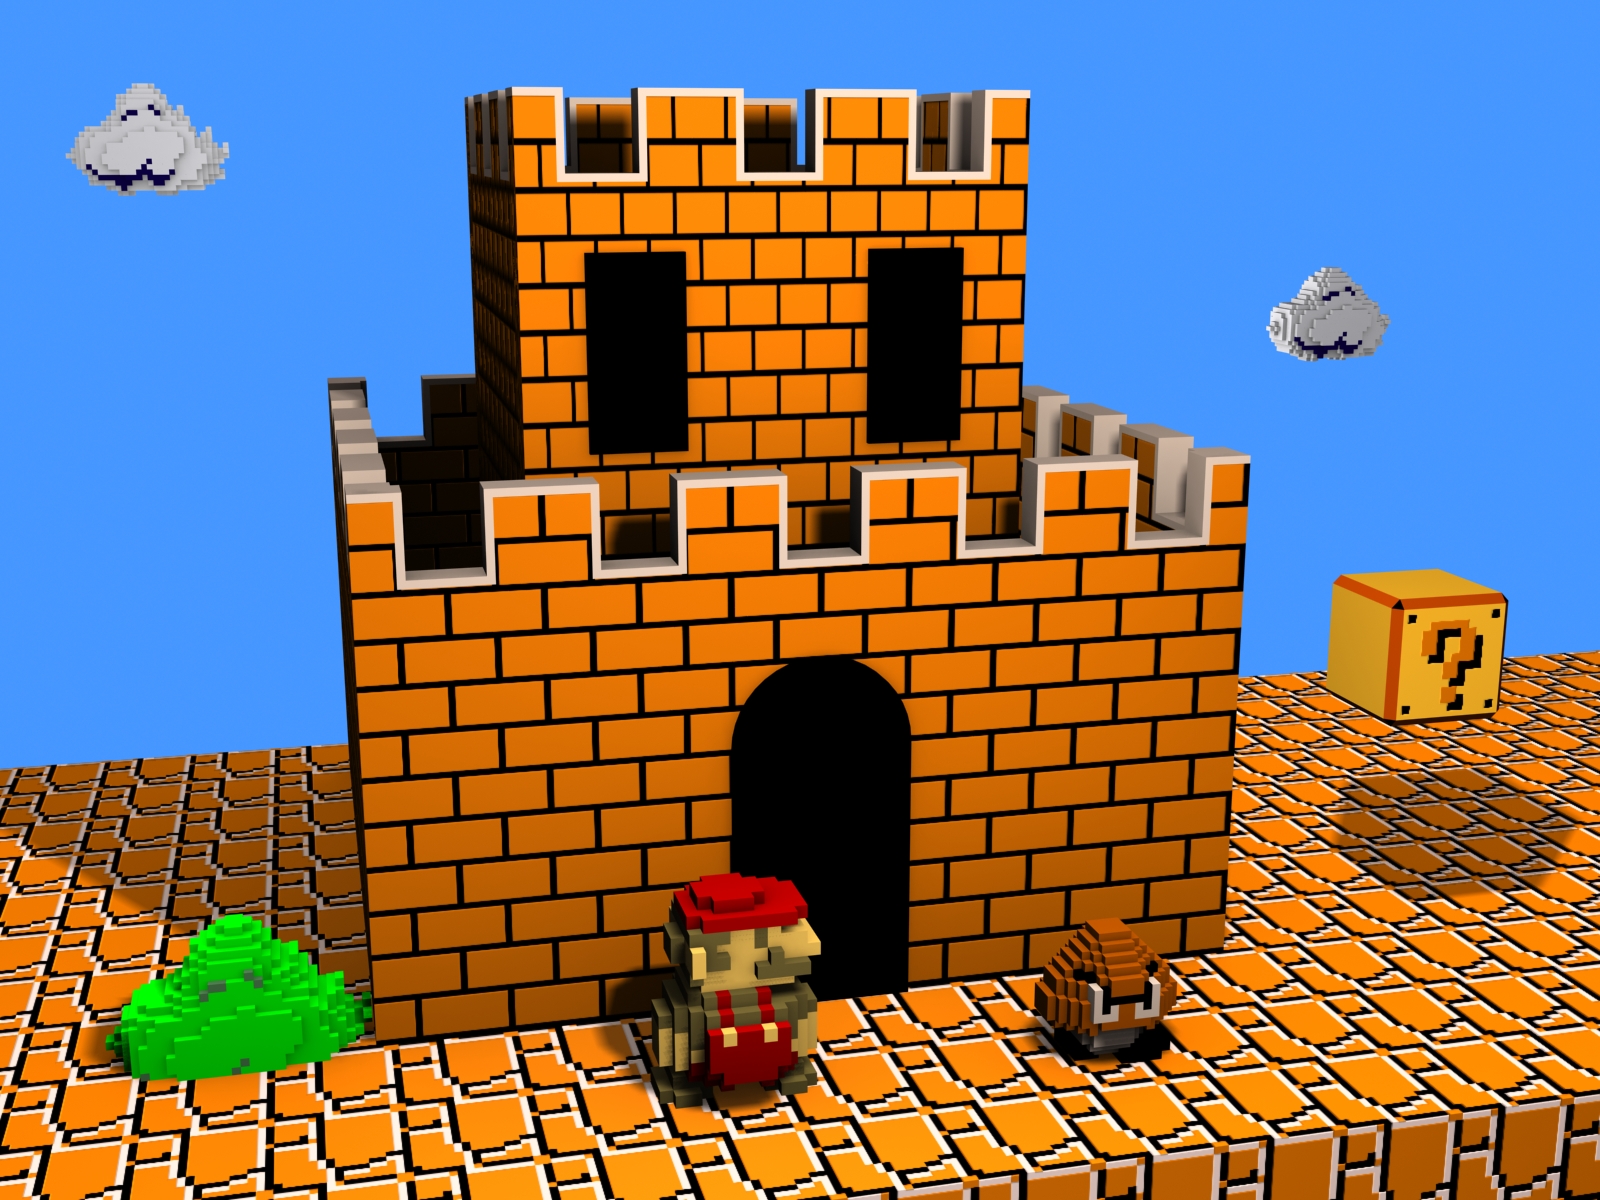 Mario Bros 3D Pixelart